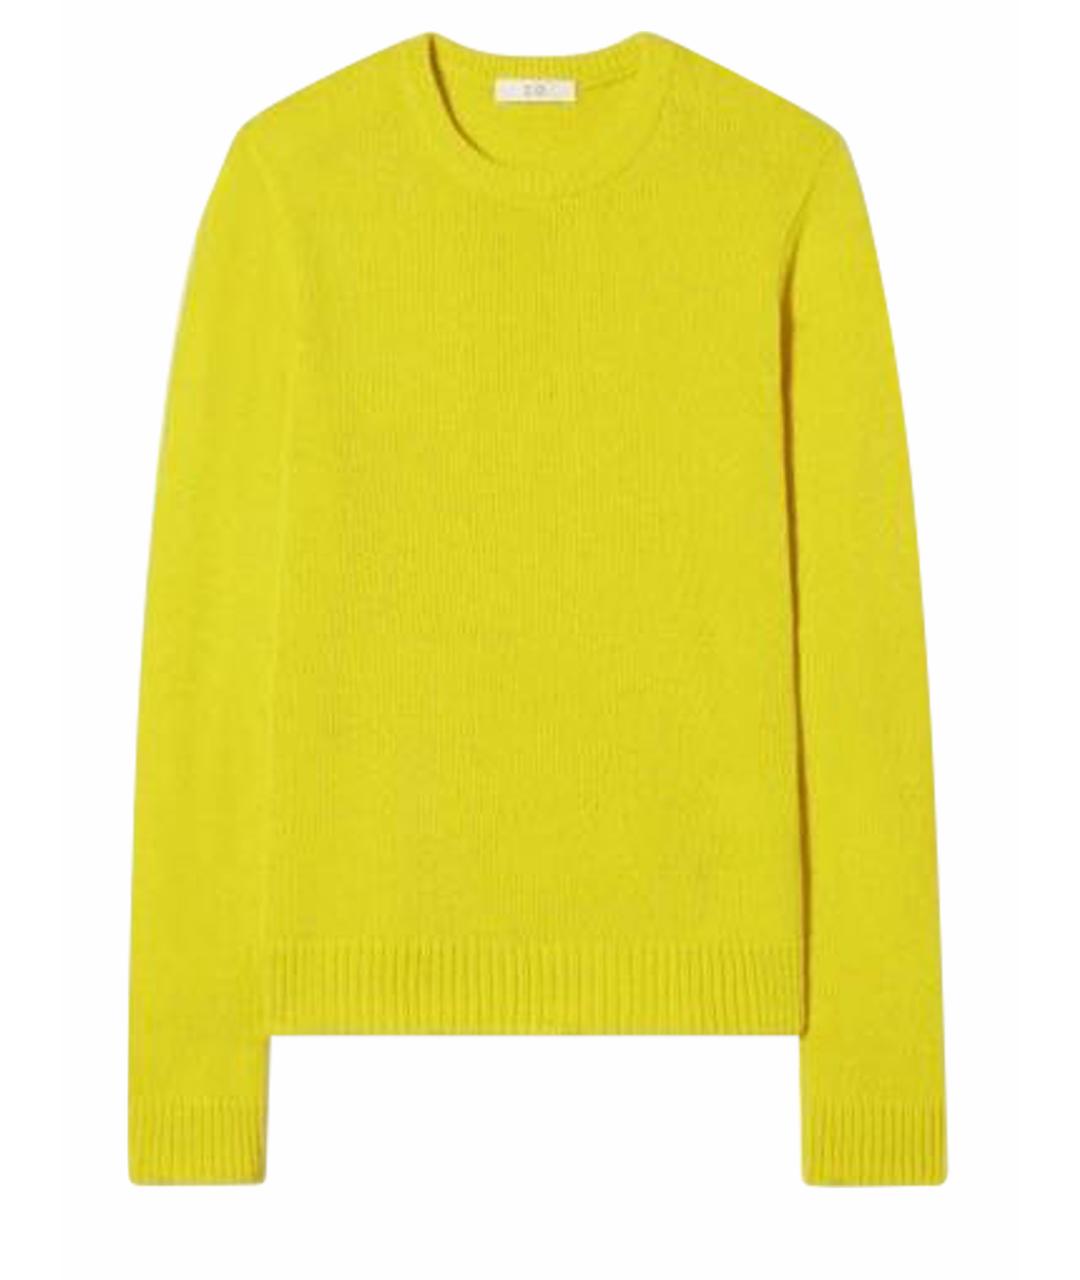 CO Желтый кашемировый джемпер / свитер, фото 1